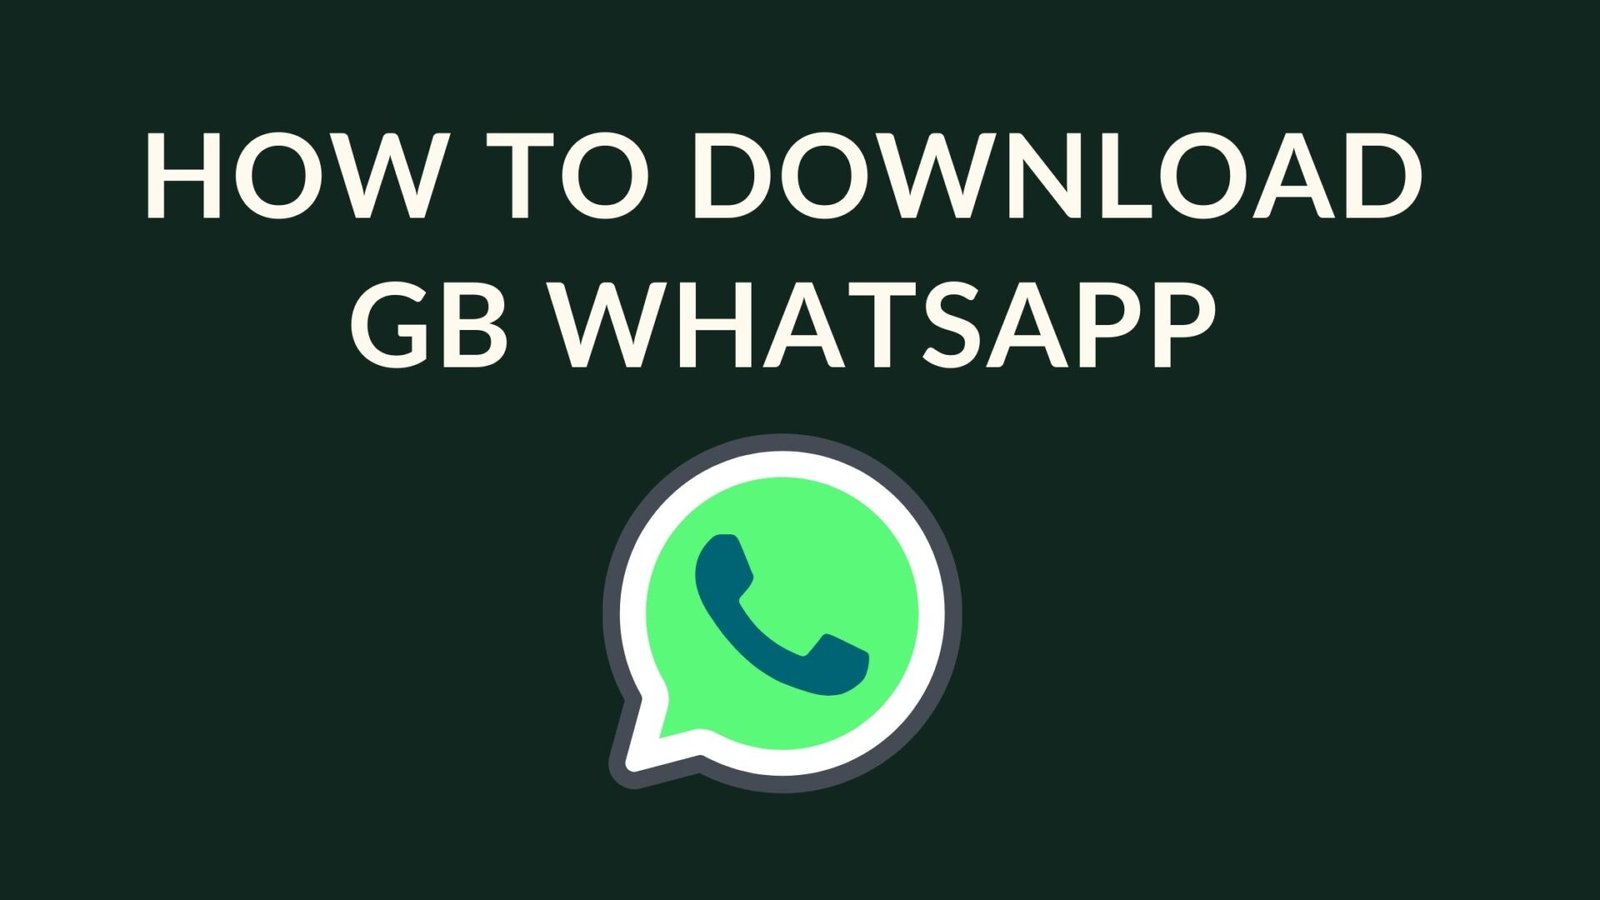 gb whatsapp 6.89 version download